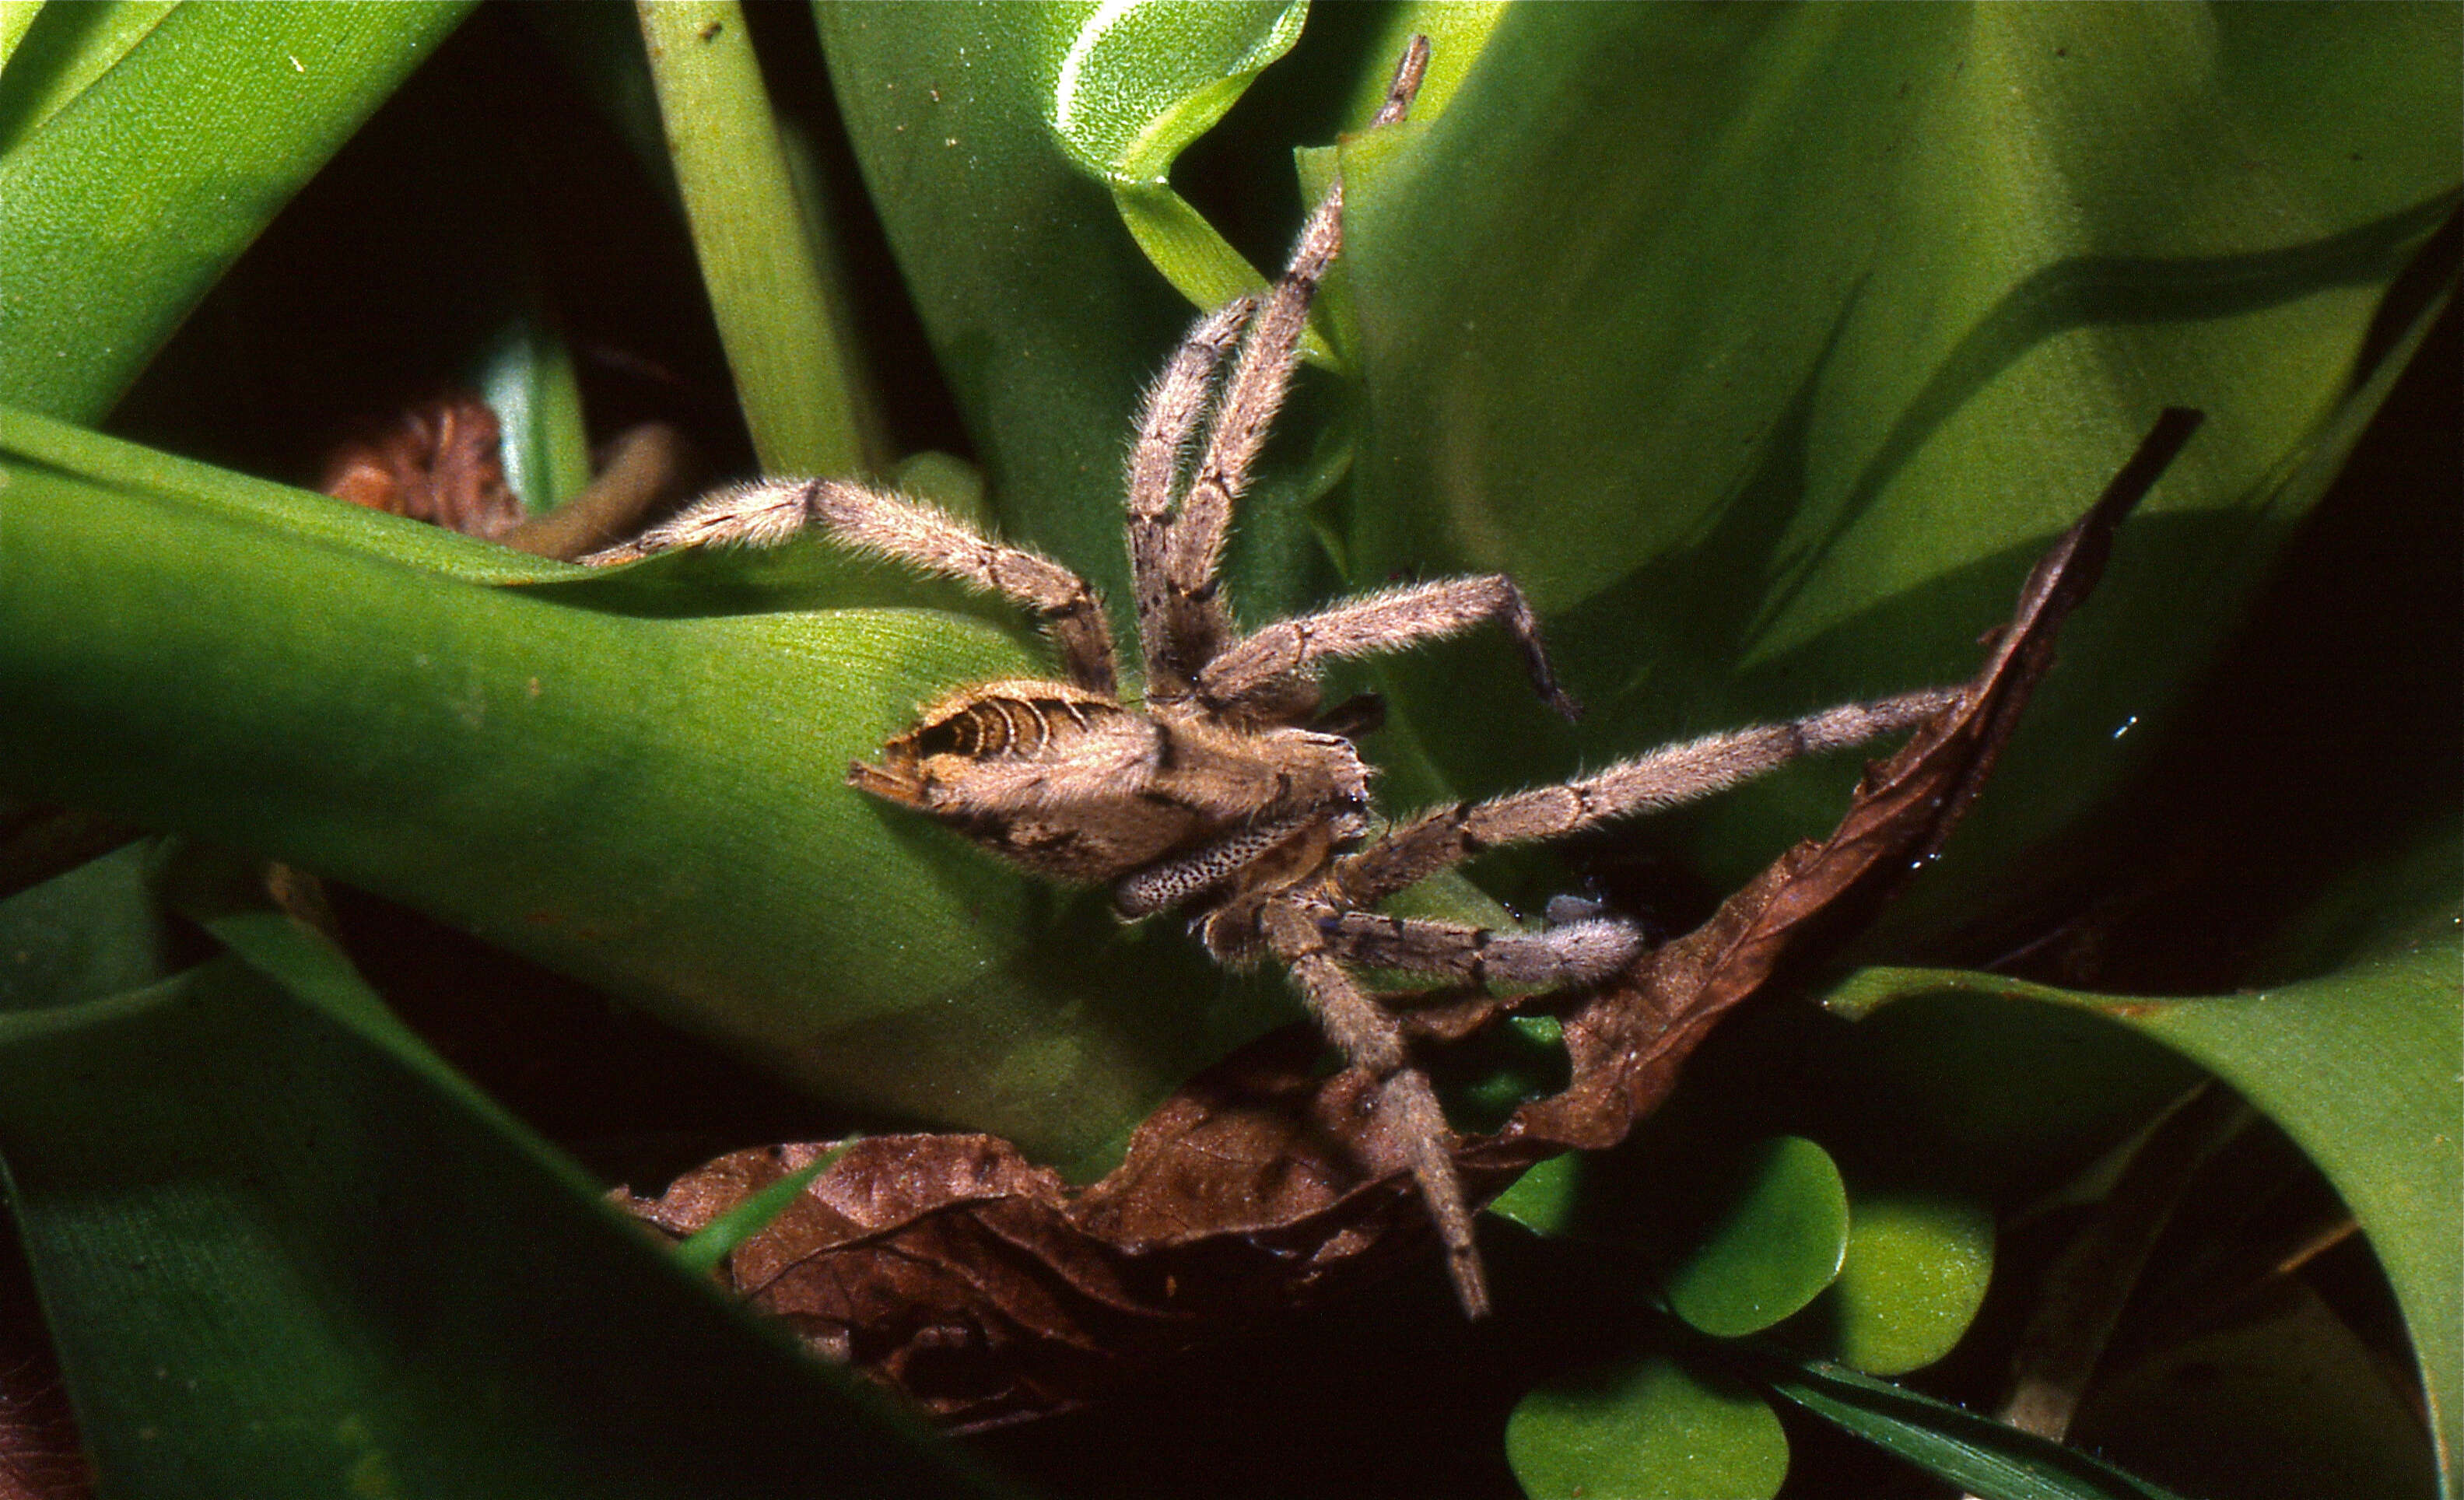 Image of longlegged water spiders